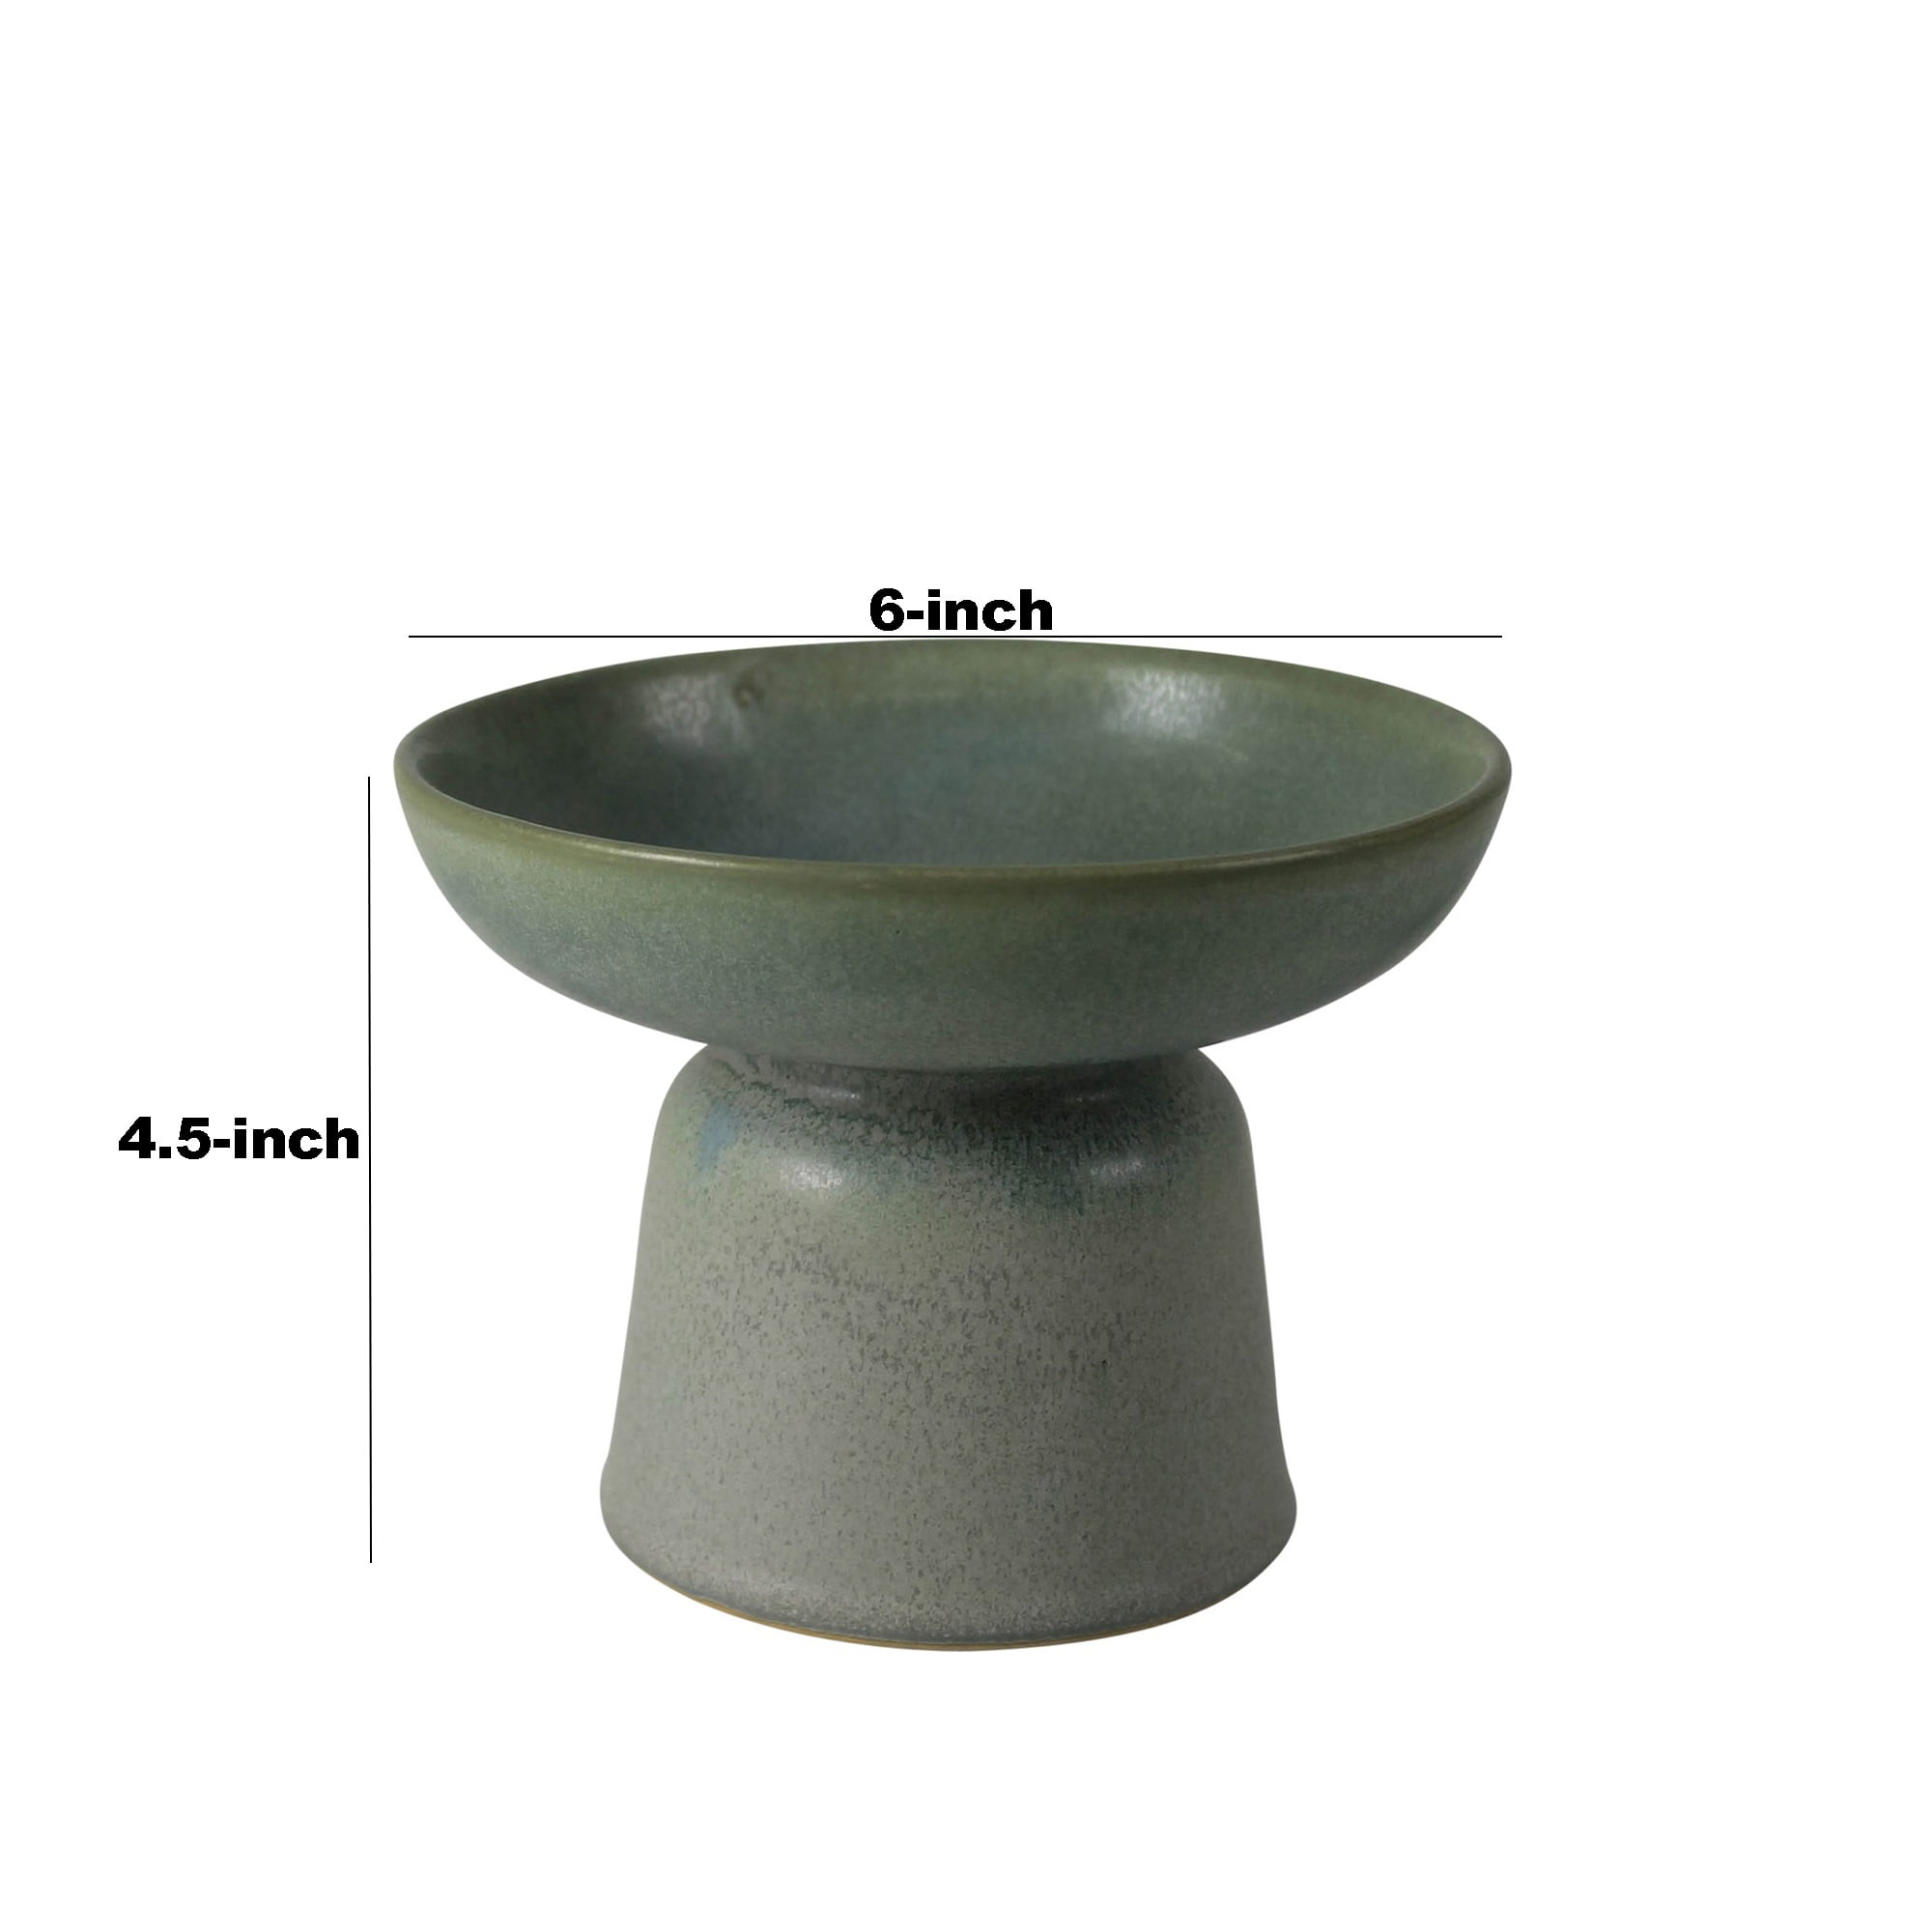 White Benjara Contemporary Ceramic Footed Bowl 